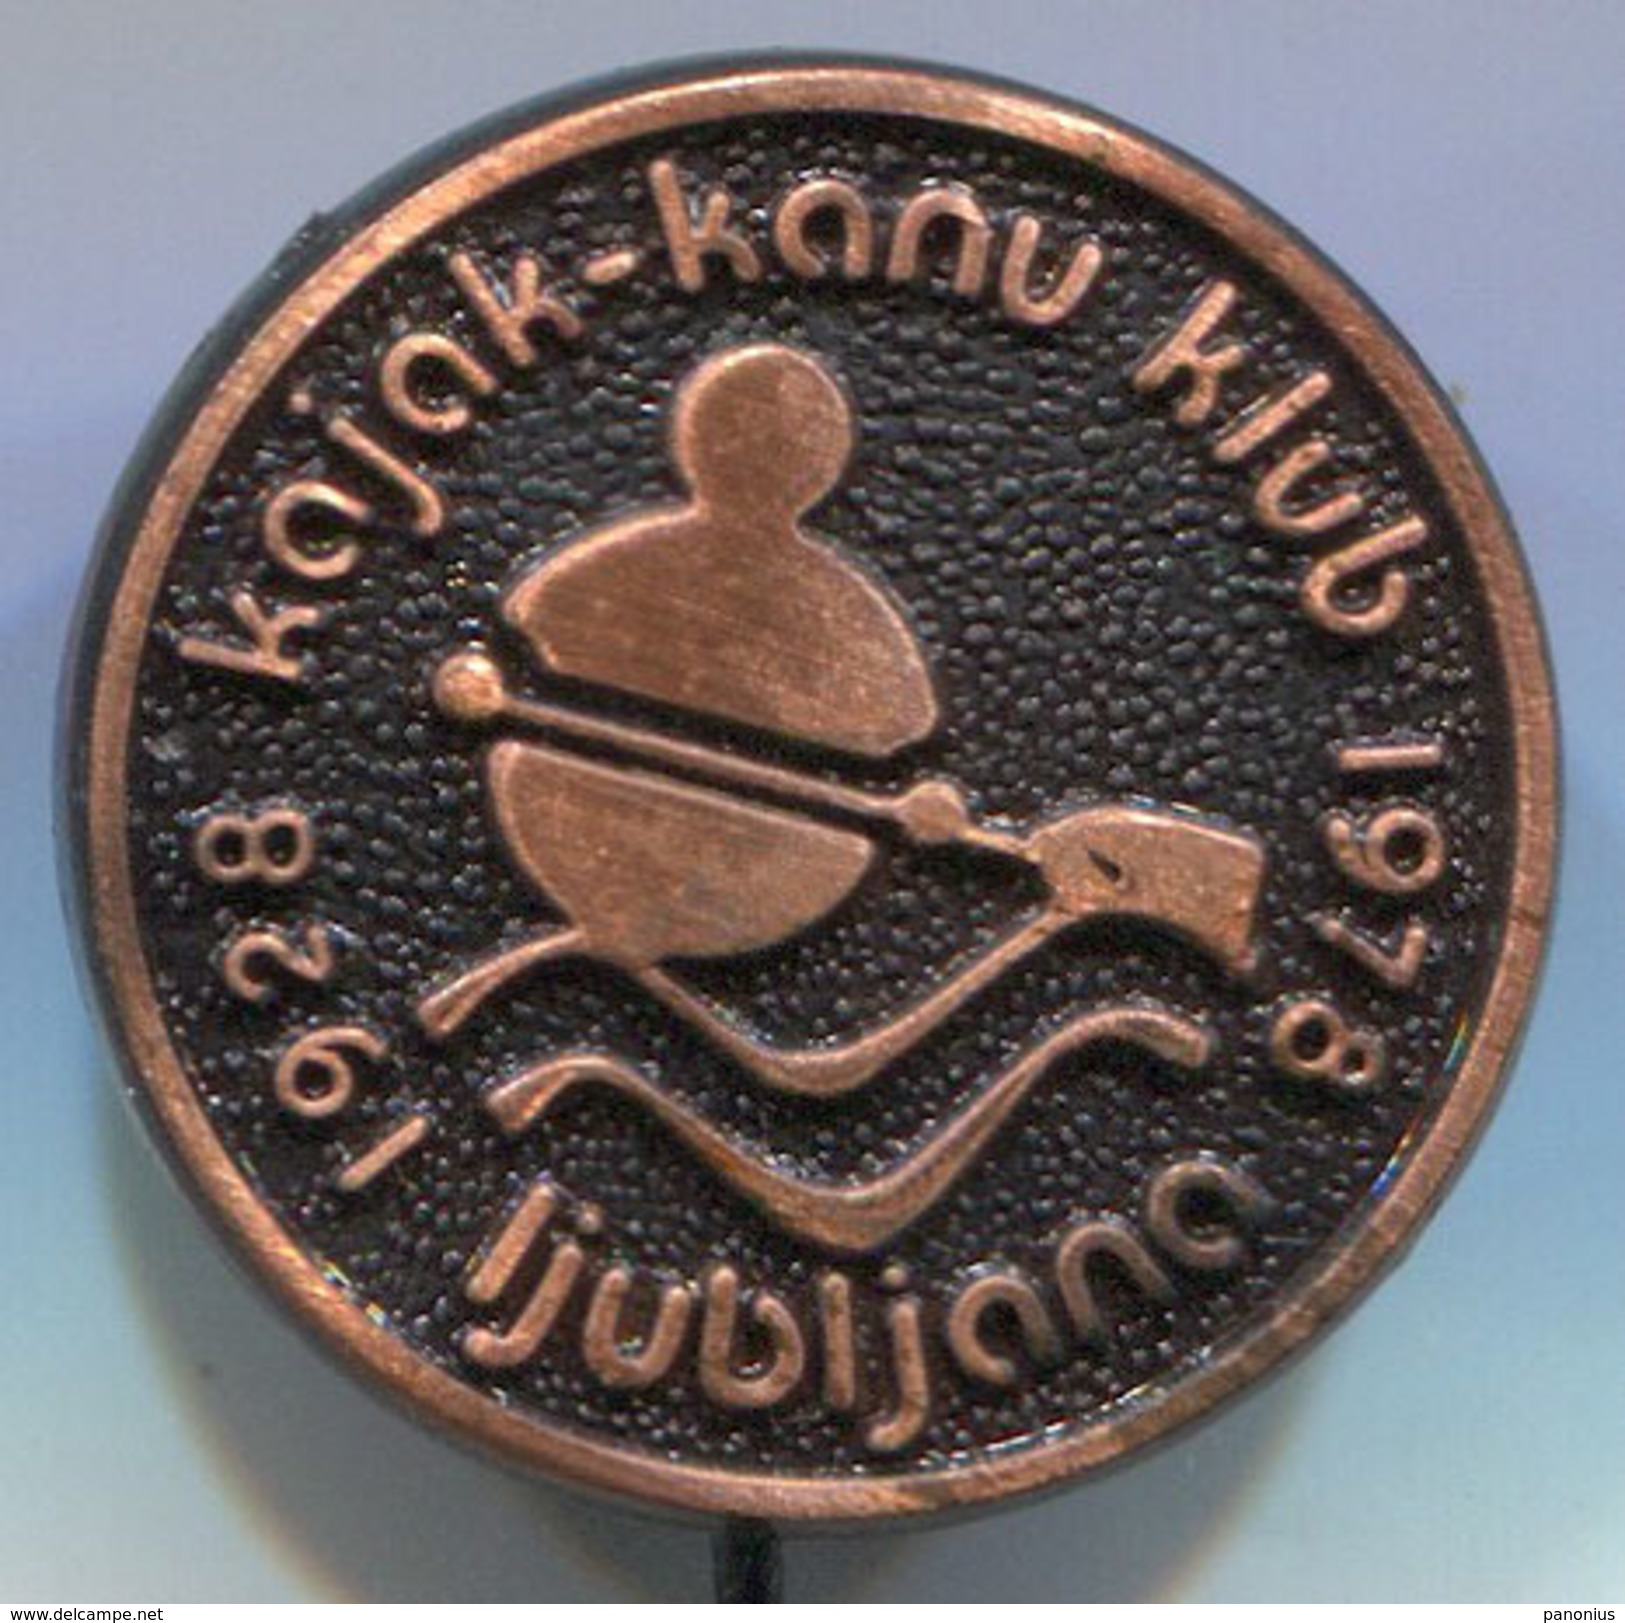 Rowing, Rudern, Canu, Kayak - Club LJUBLJANA, Slovenia, Vintage Pin, Badge, Abzeichen - Rudersport